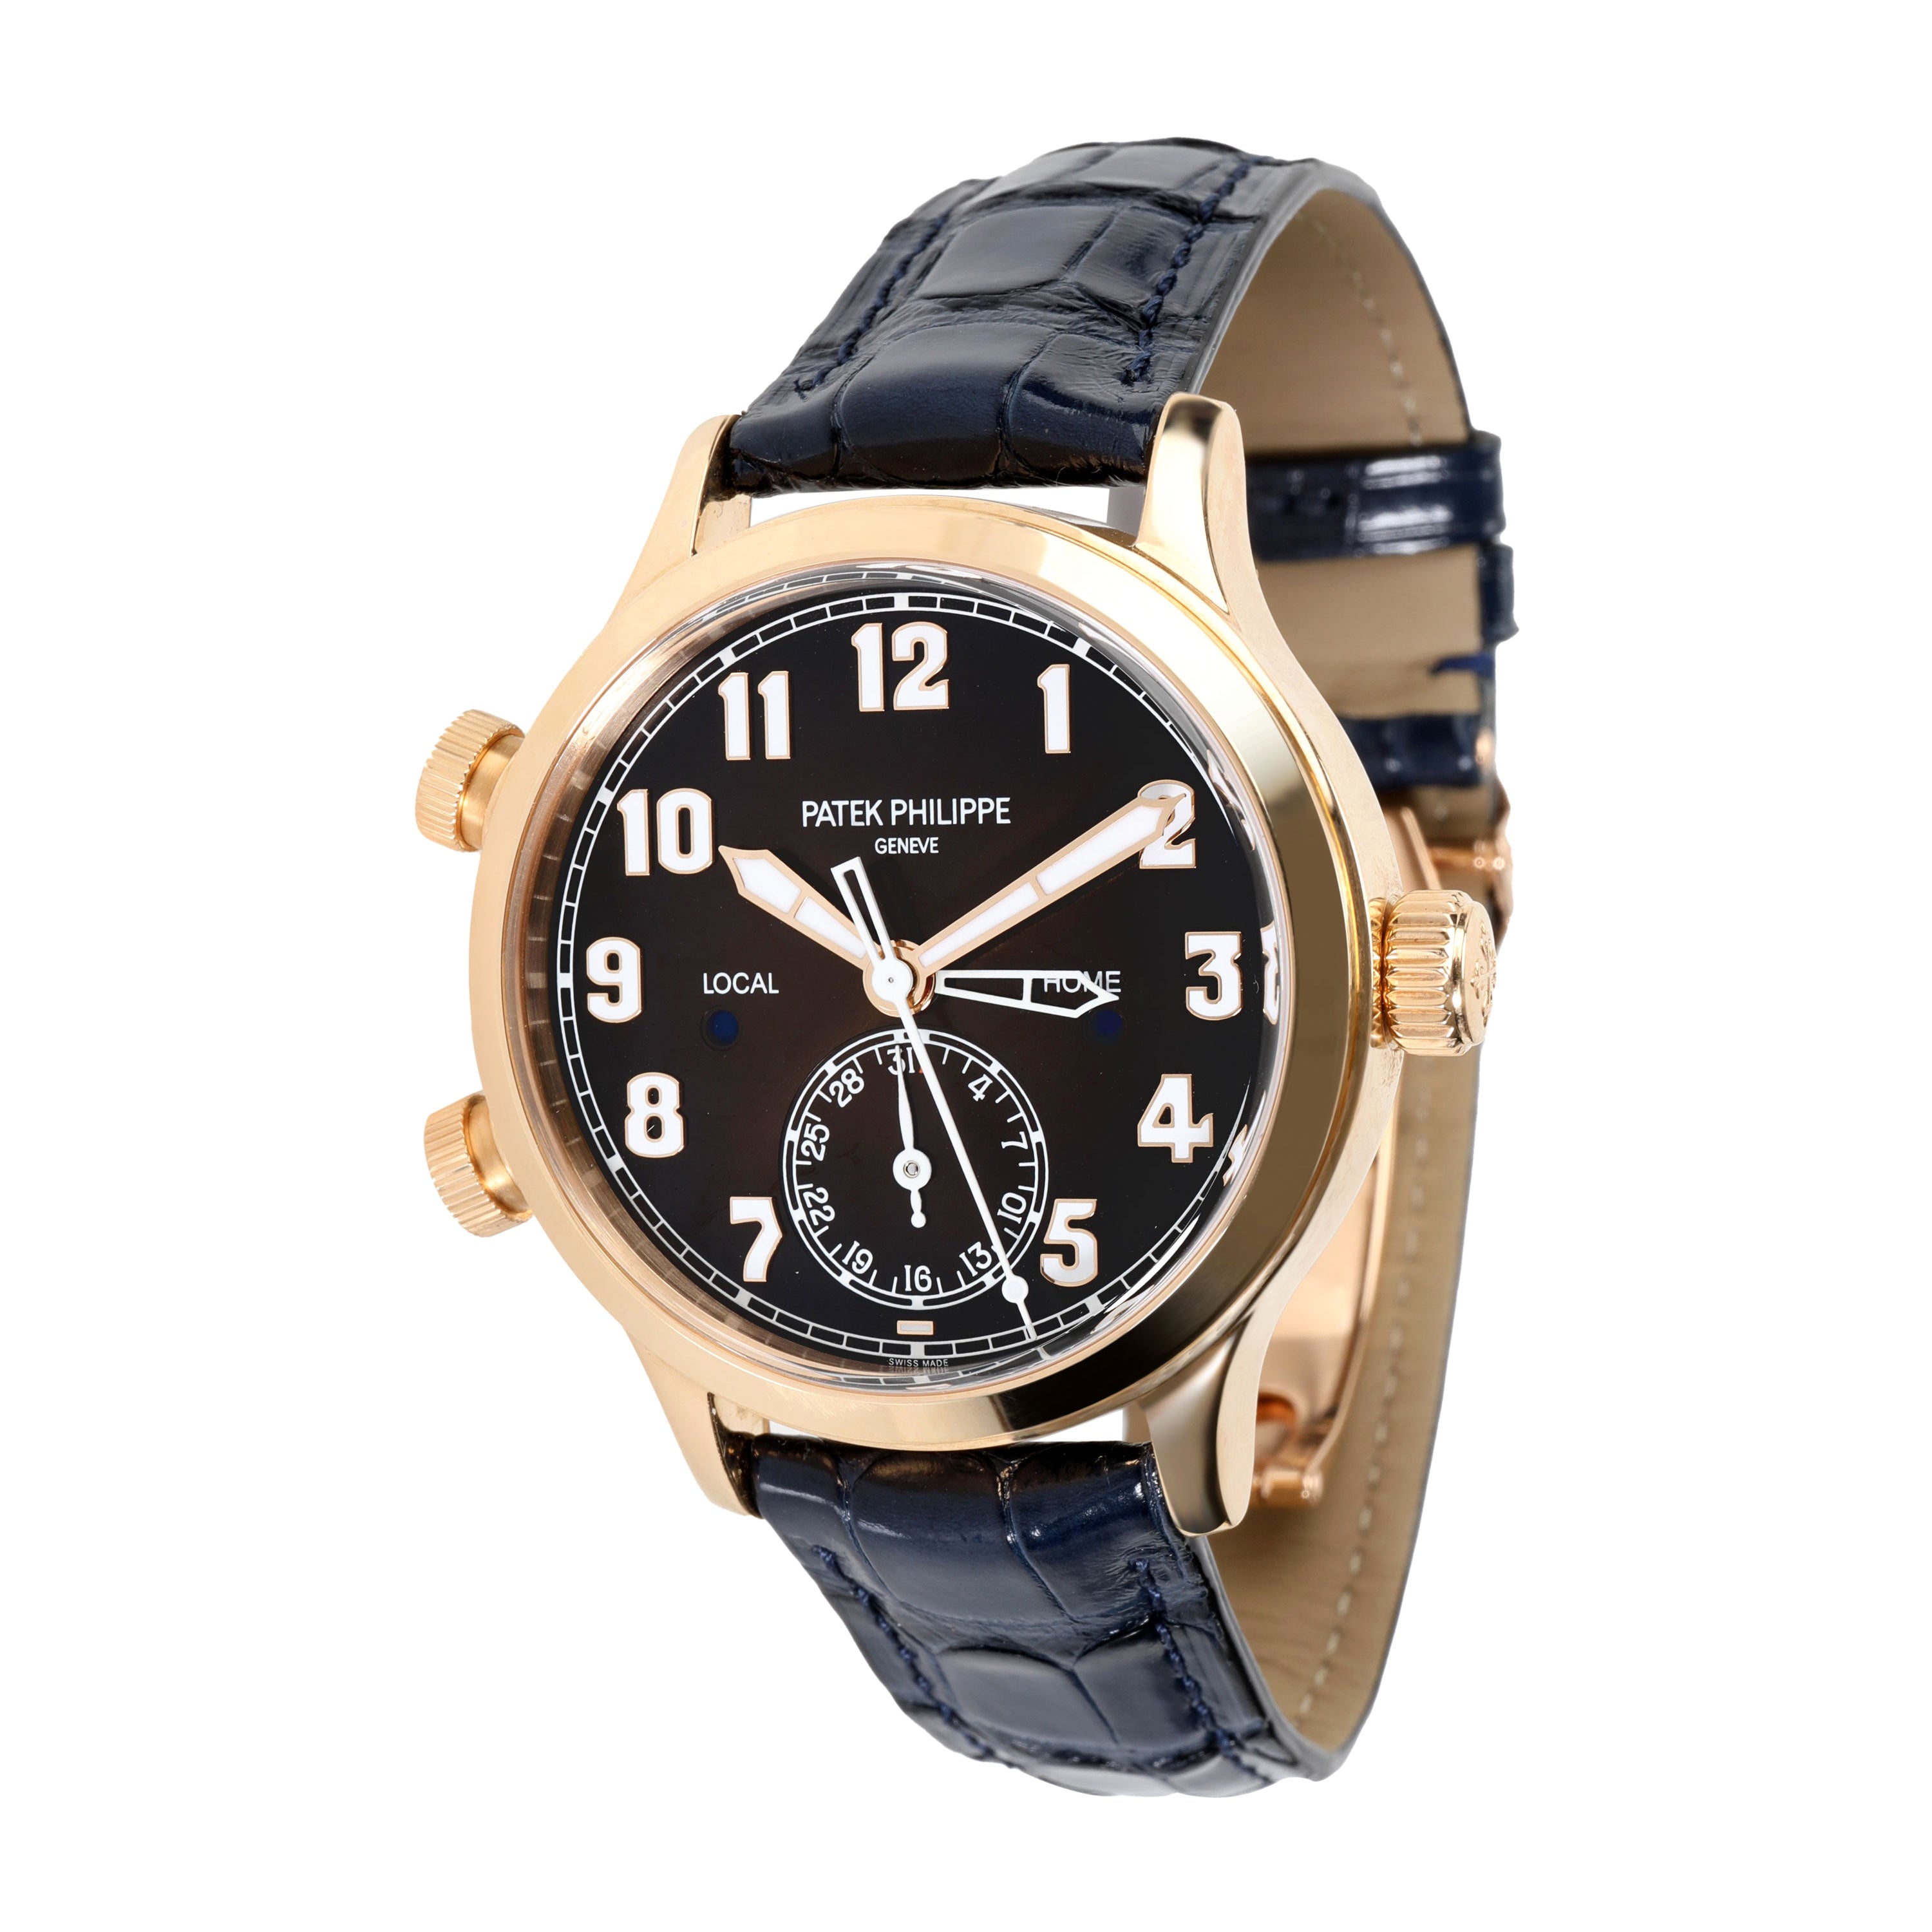 Patek Philippe Pilot Travel Time 7234R-001 Men's Watch in 18kt Rose Gold